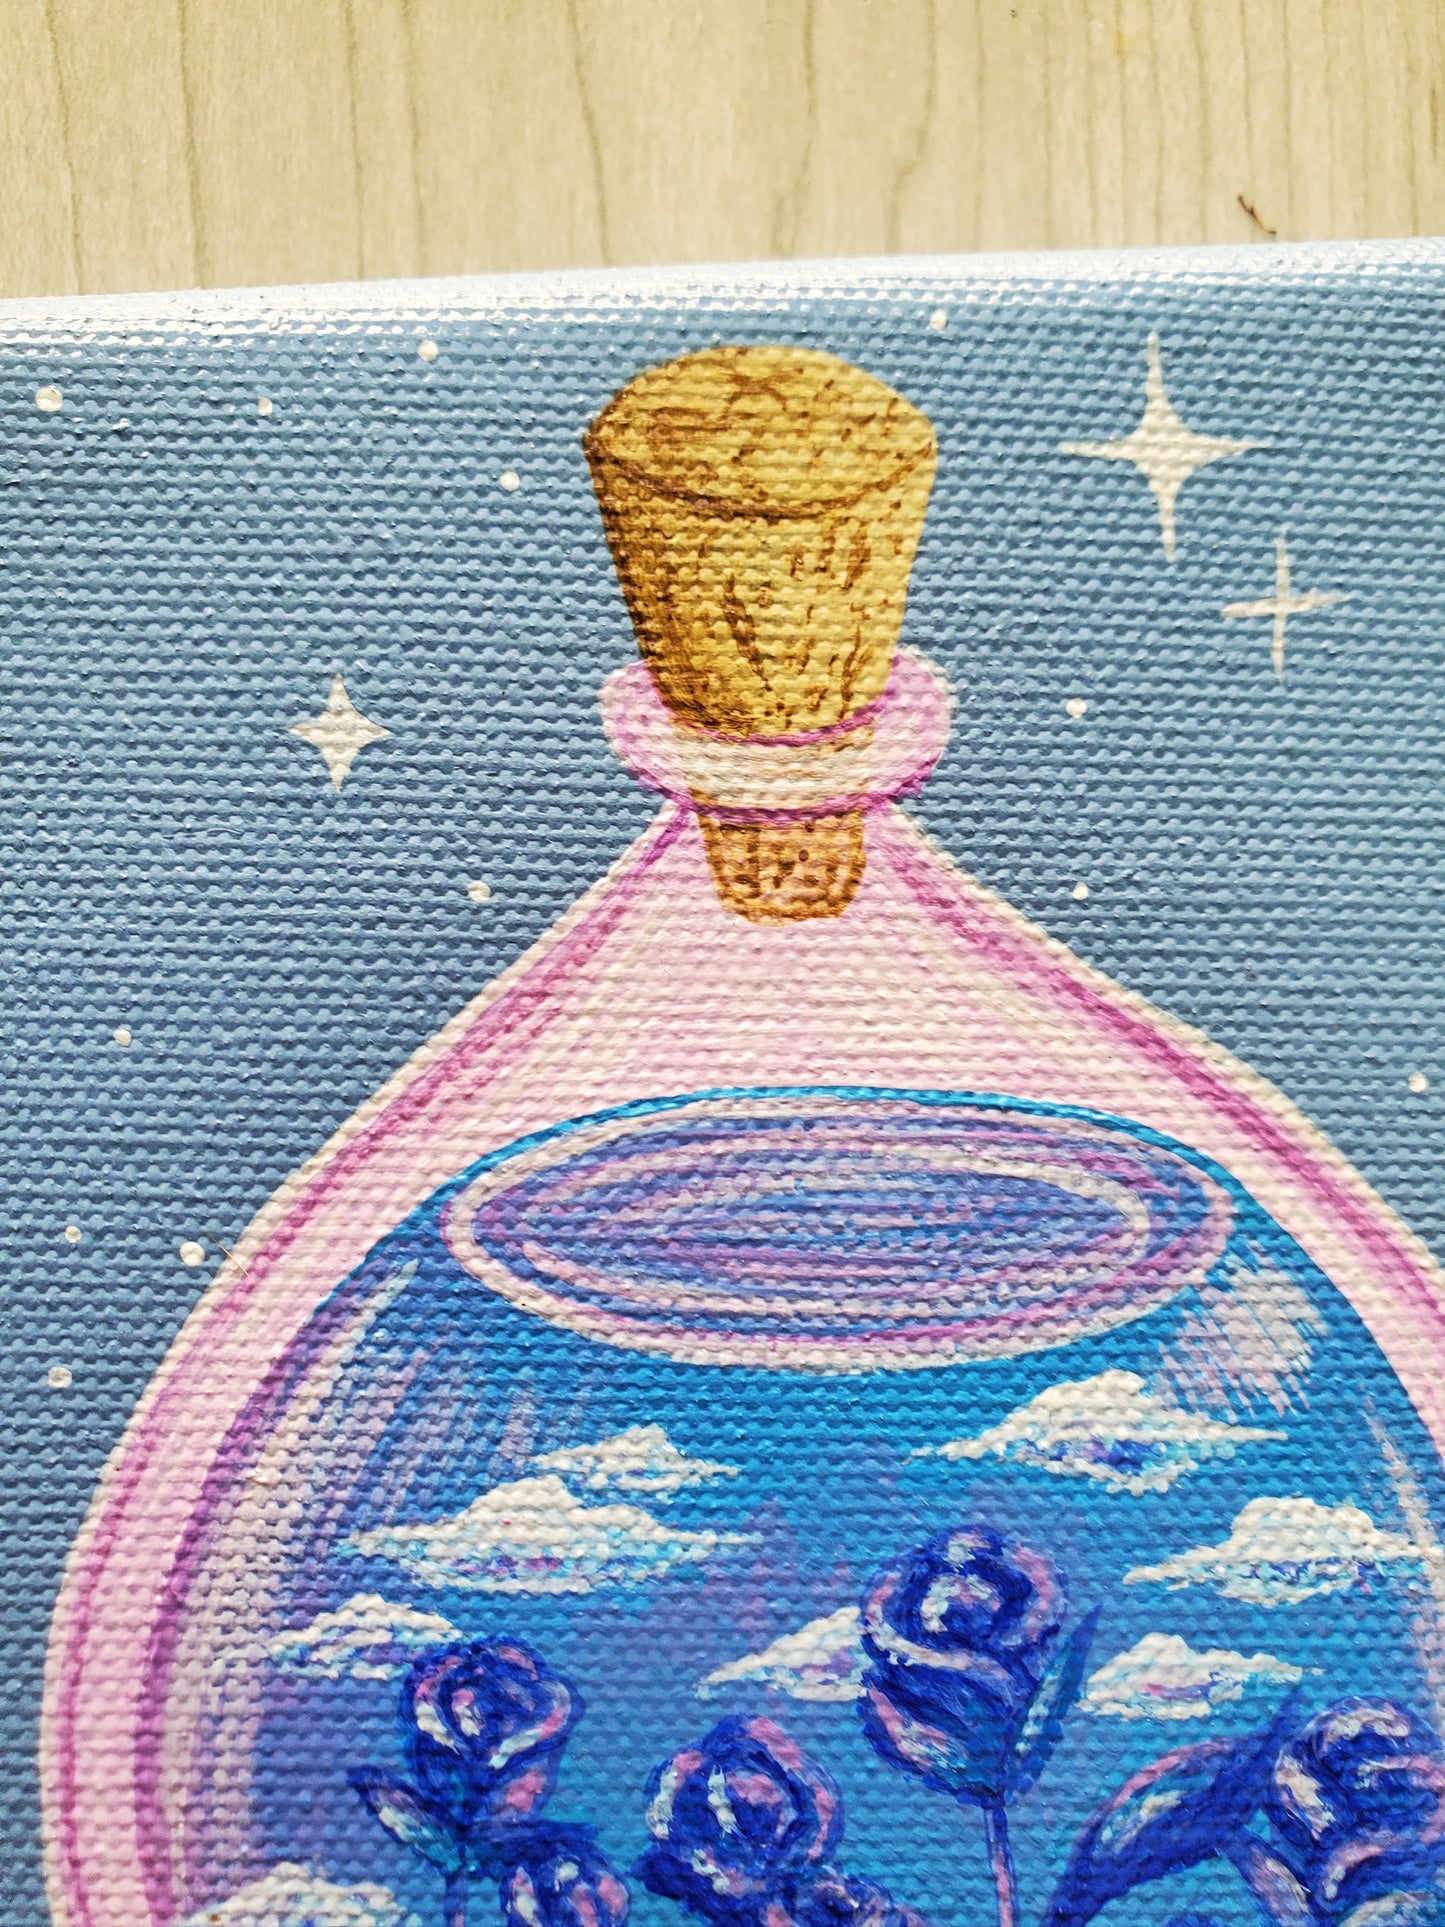 Blue Rose Potion Bottle Painting